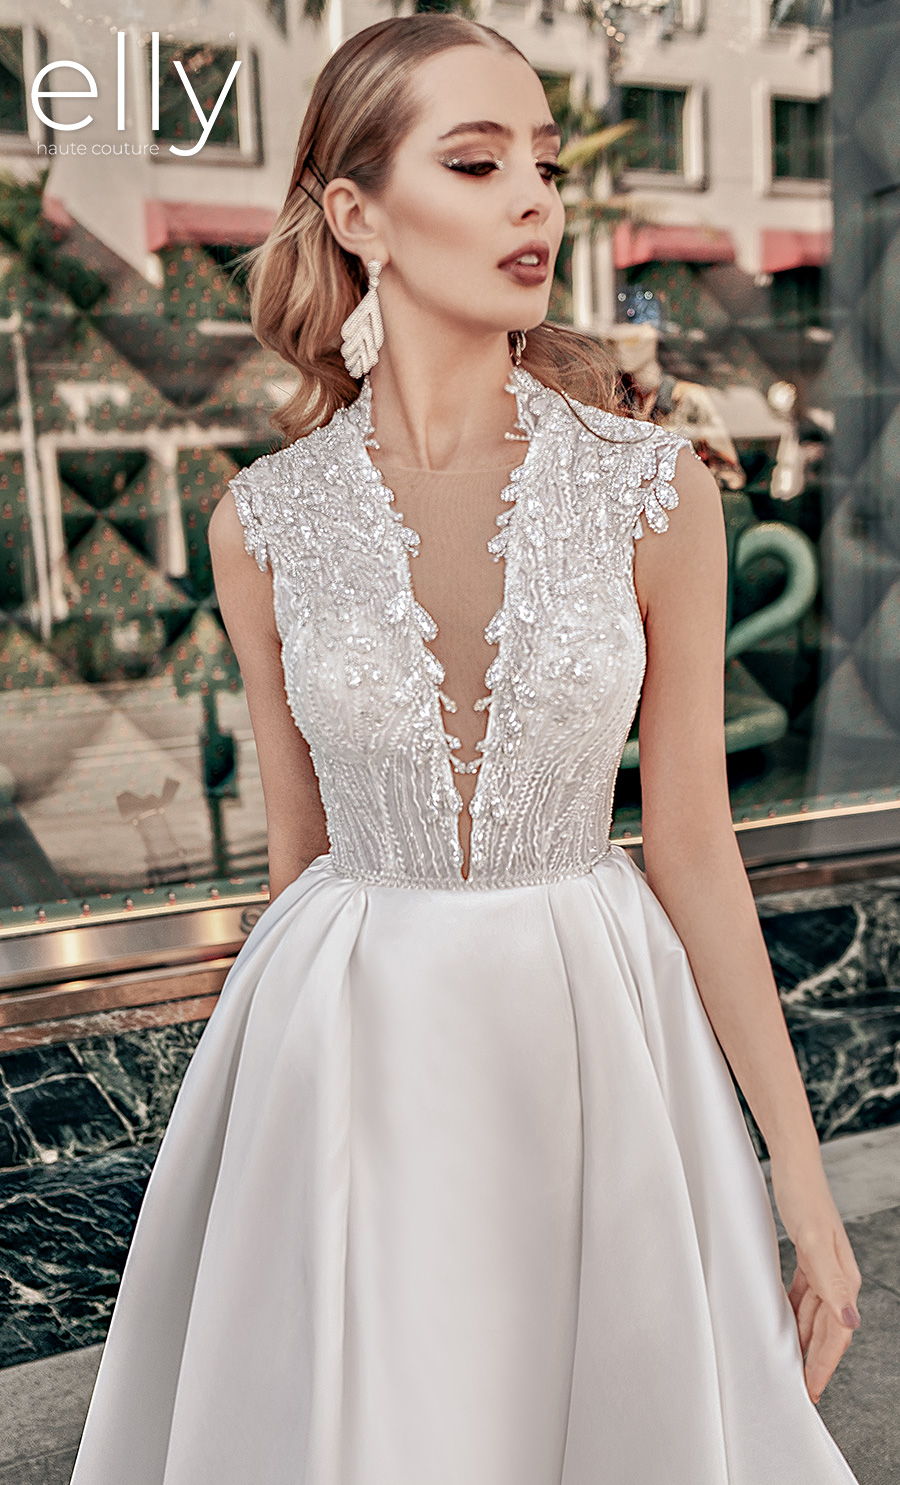 White Runway Arianna New Wedding Dress Save 25% - Stillwhite